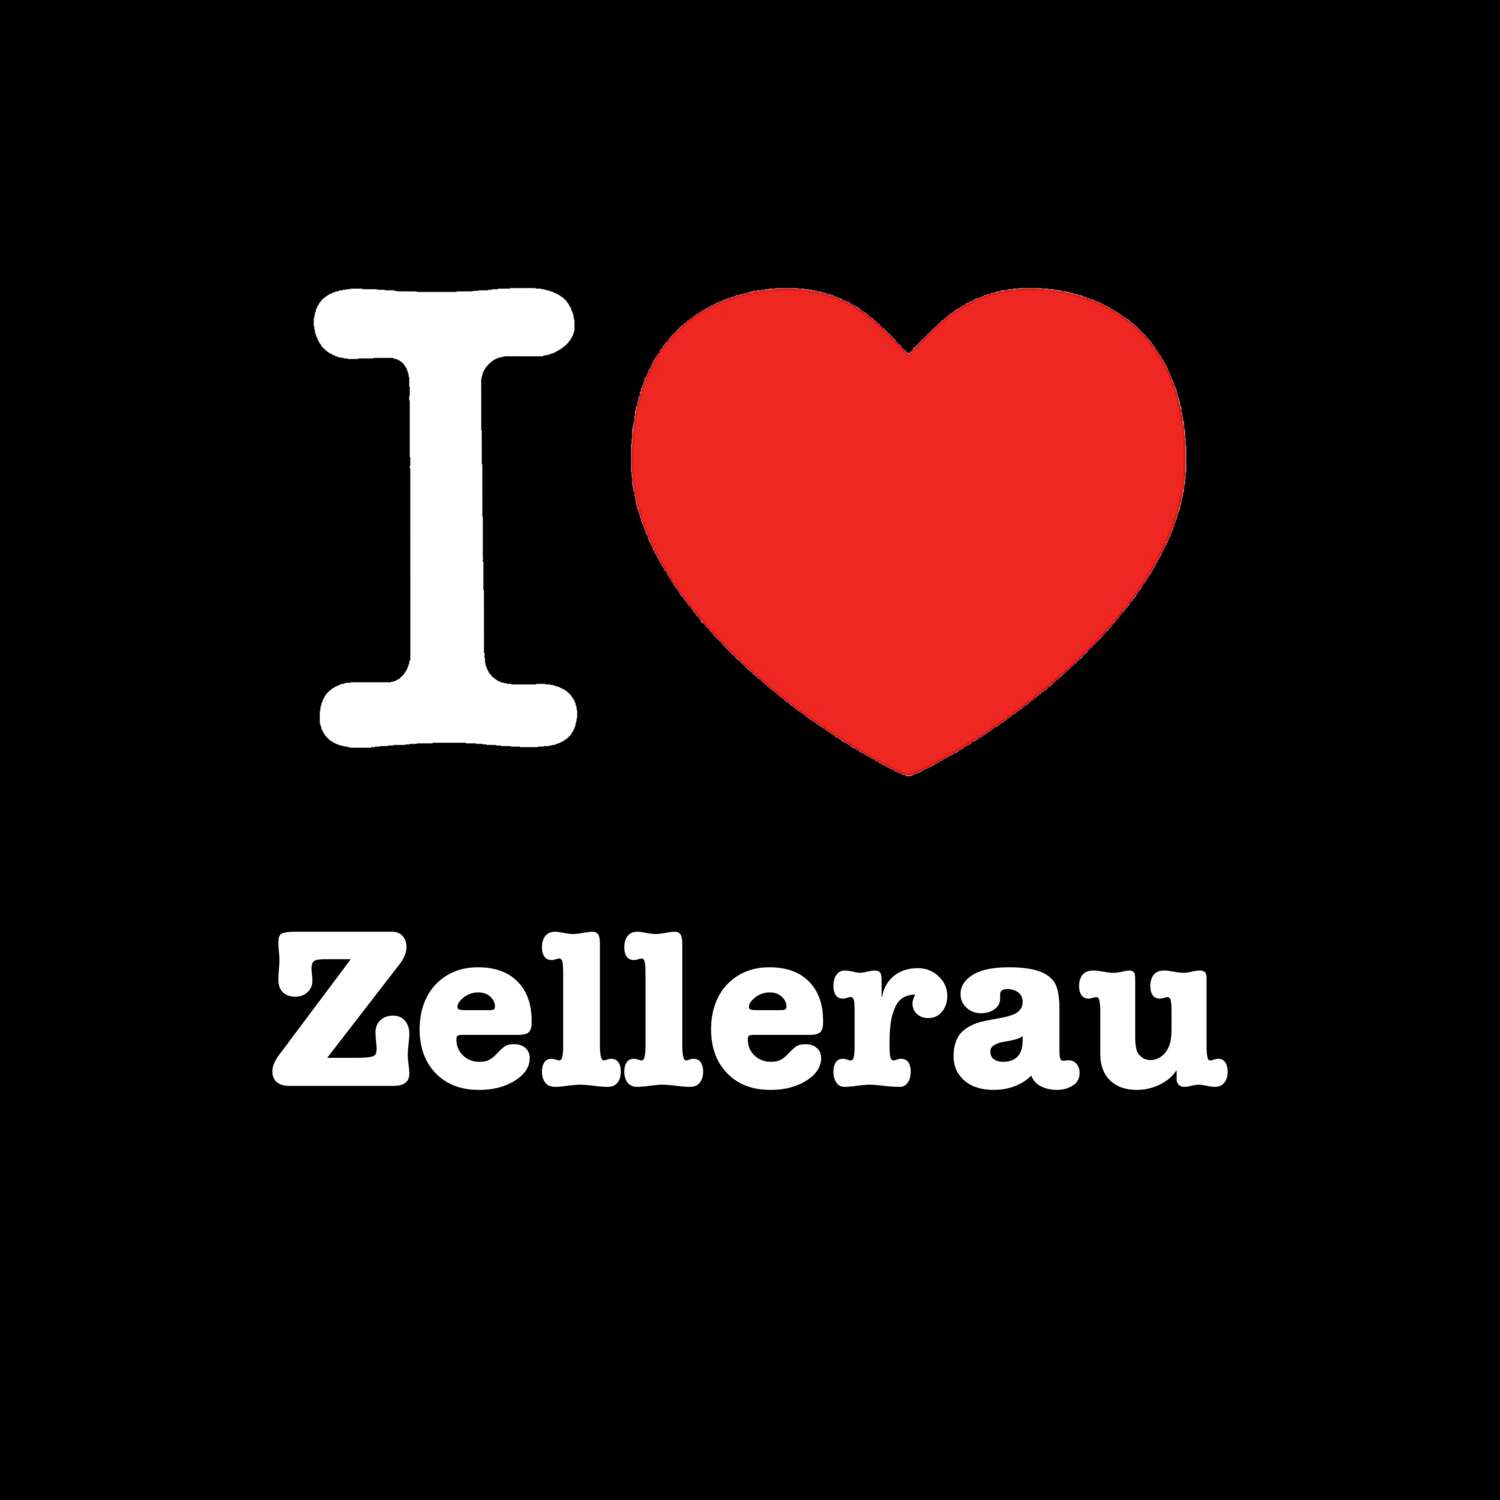 Zellerau T-Shirt »I love«